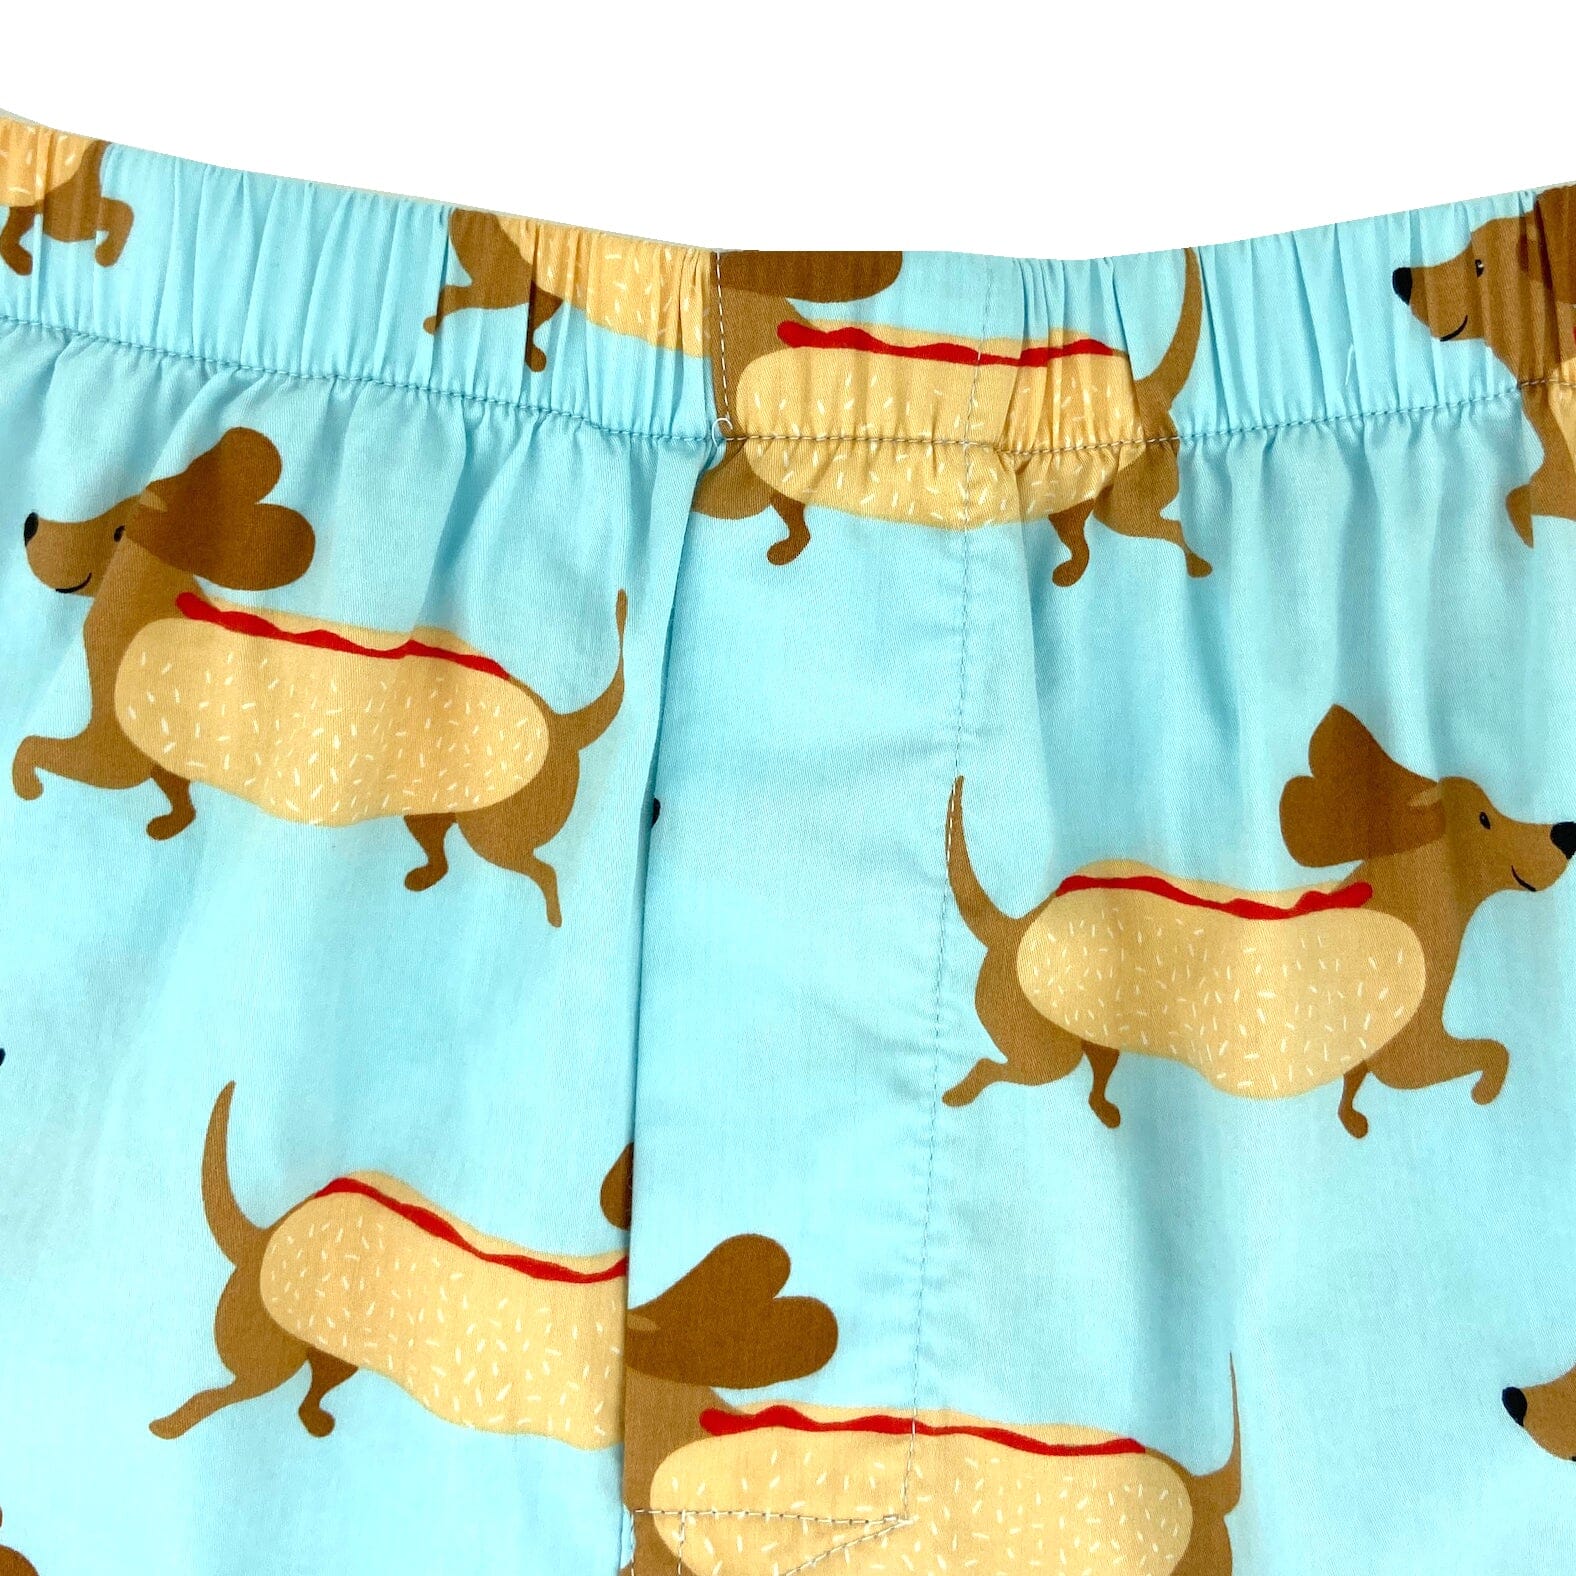 Cute Dachshund Sausage Weiner Hotdog All Over Print Boxer Shorts